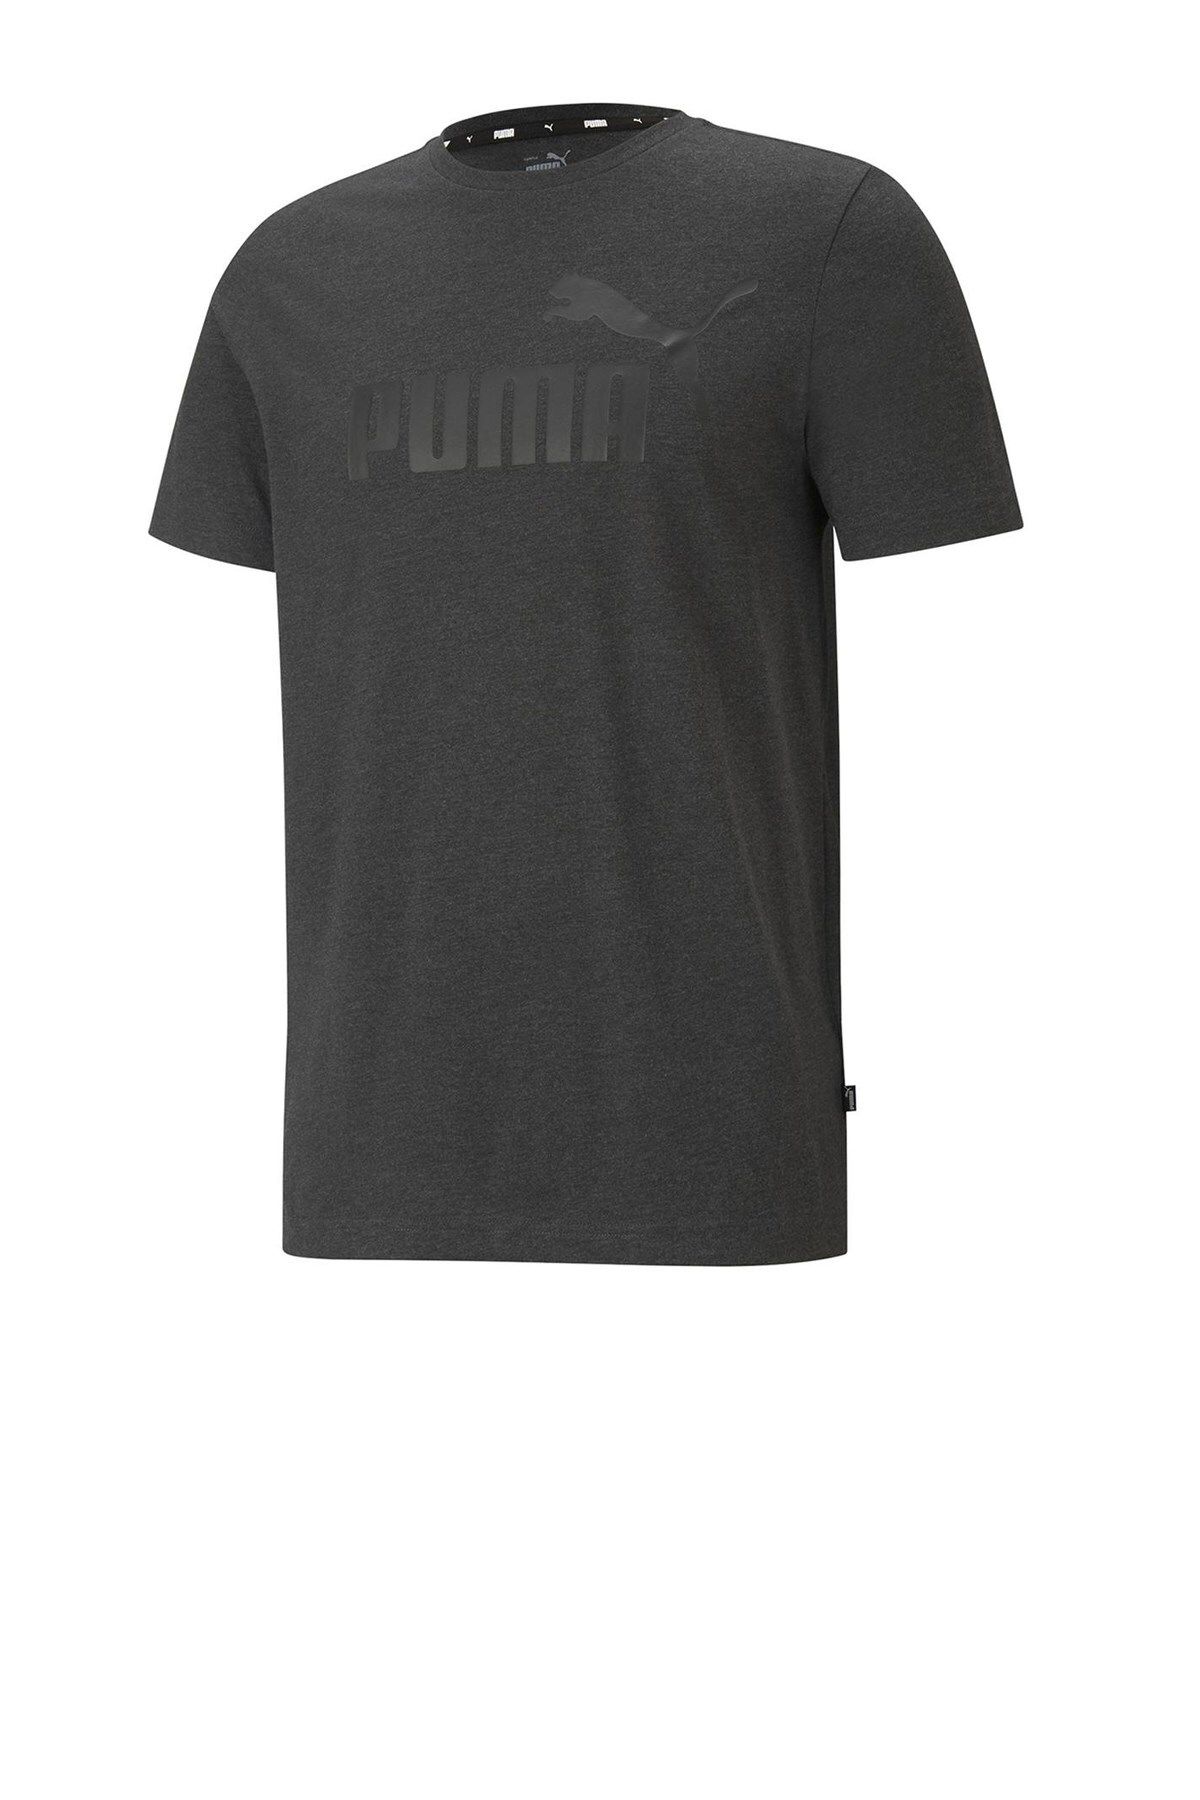 Puma Ess Heather Men's T-Shirt 58673607 - Trendyol